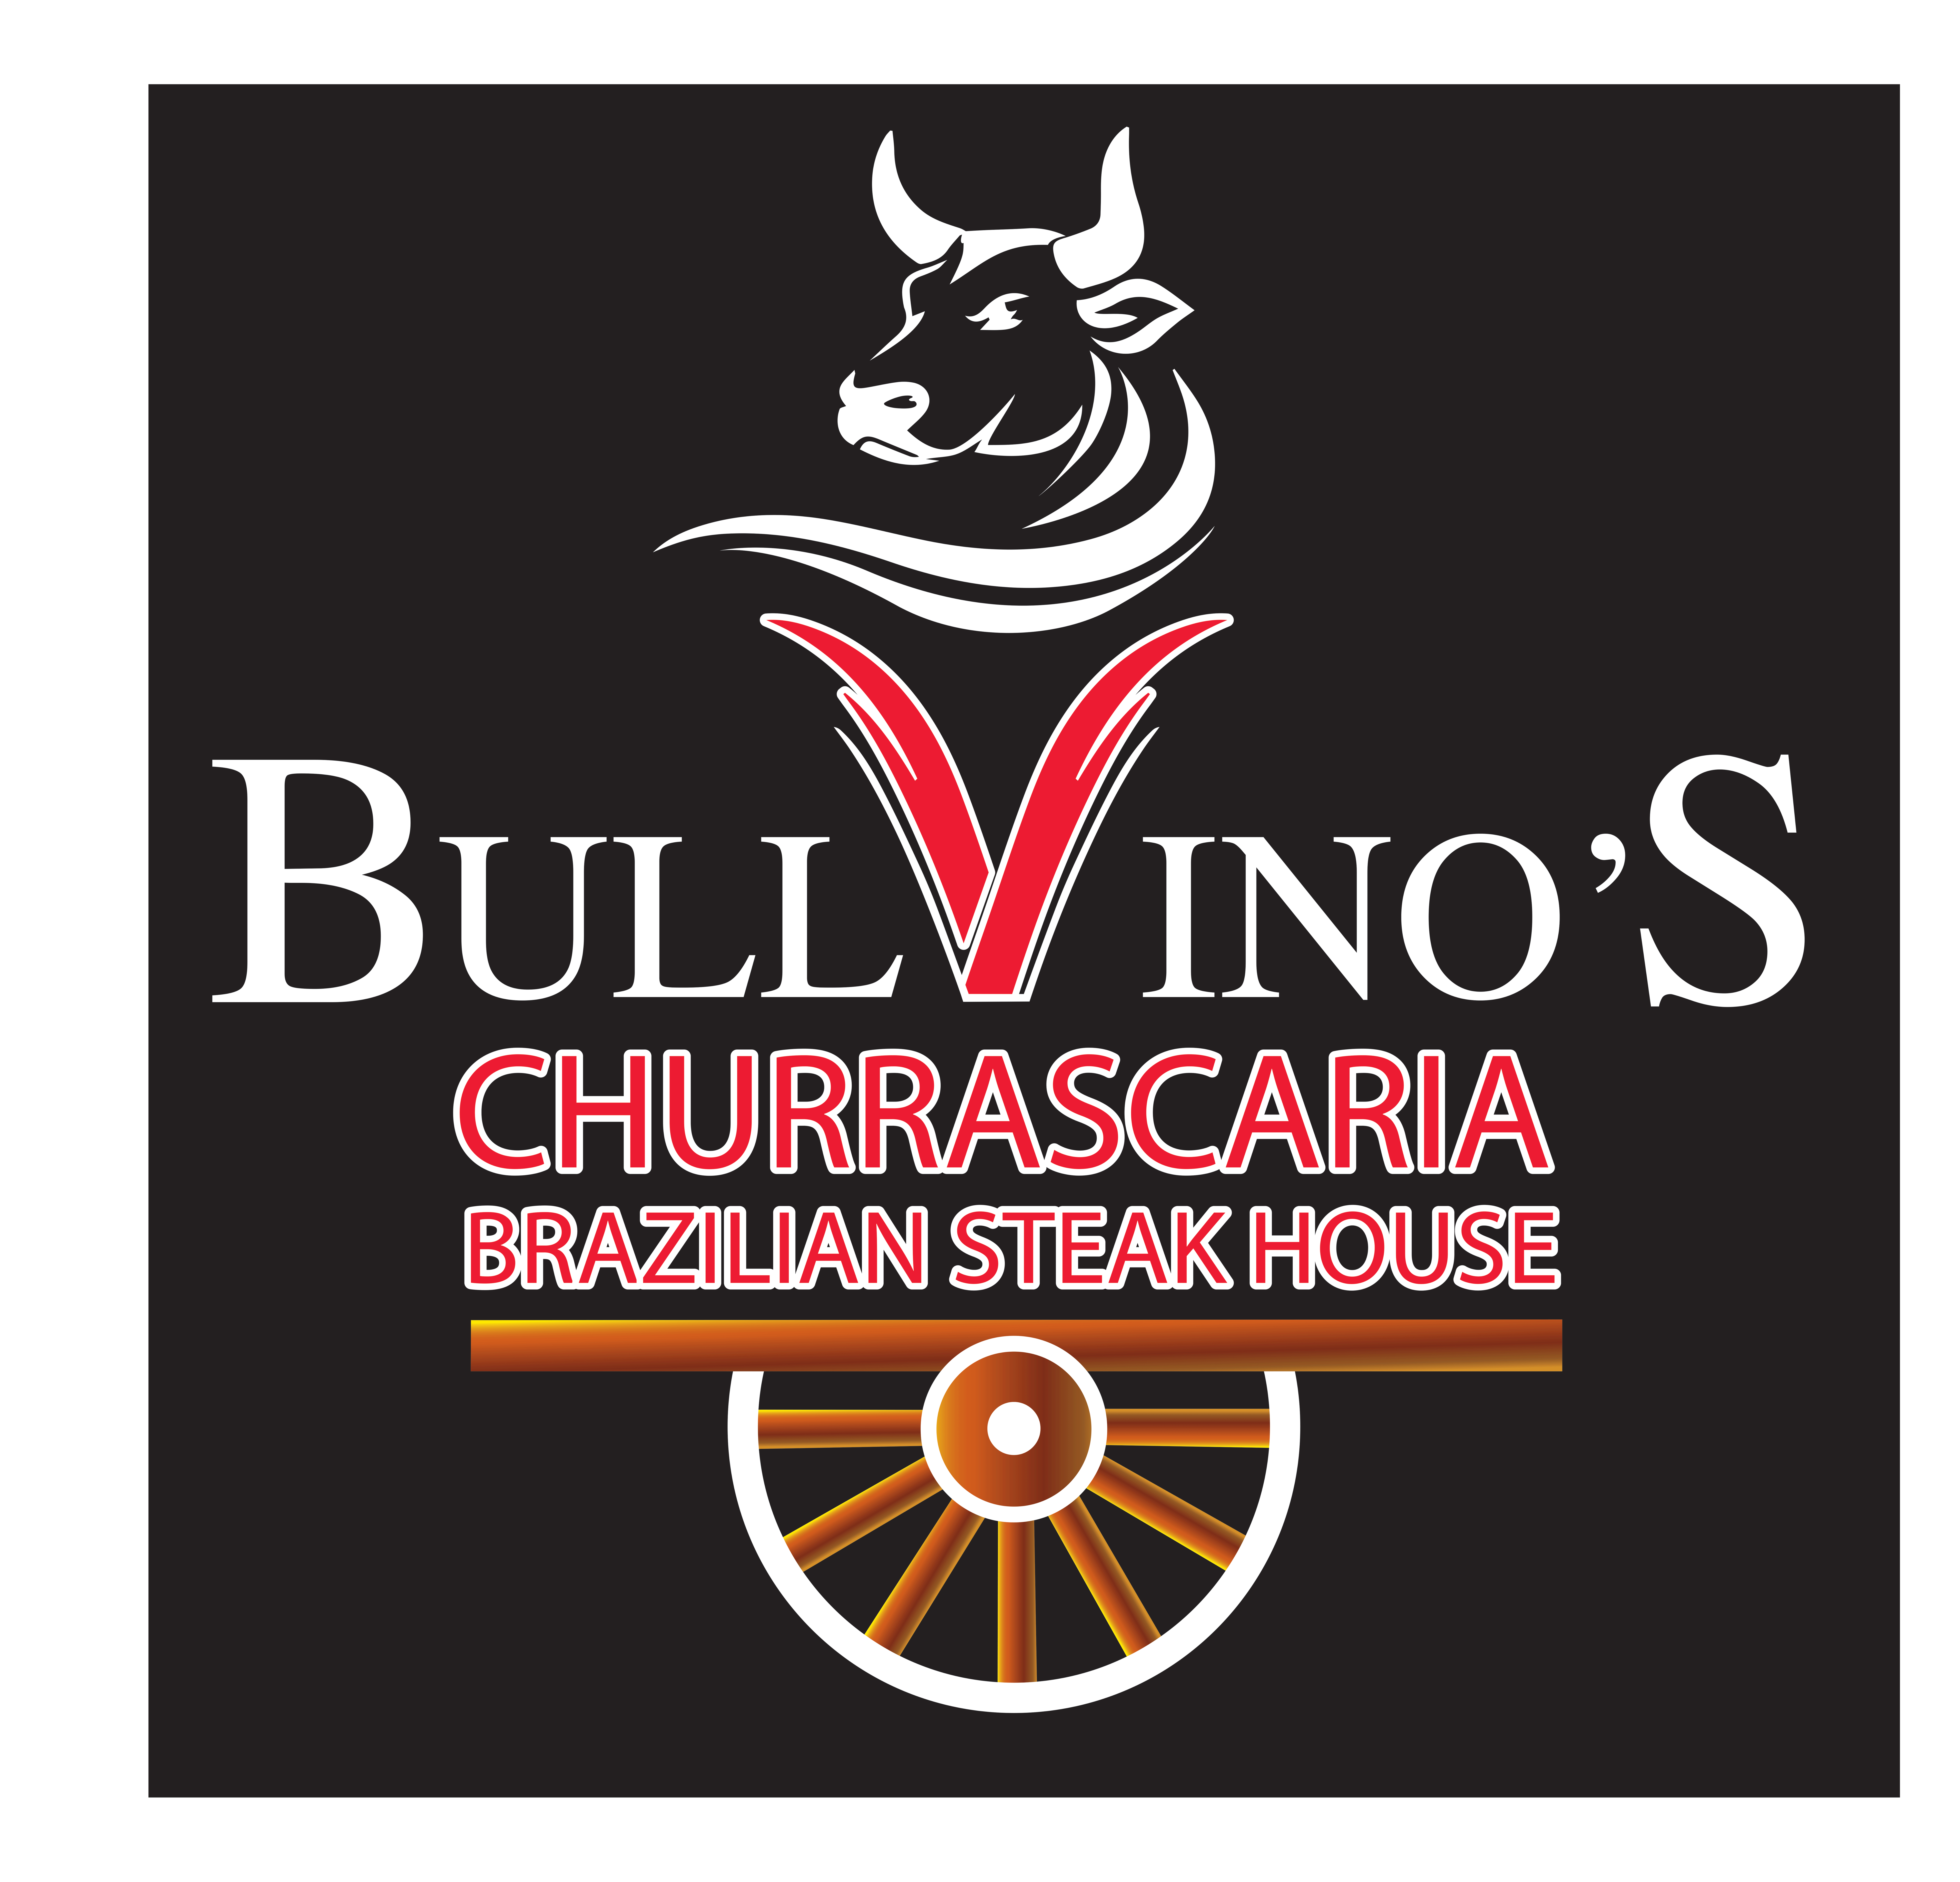 Bullvino's Churrascaria Brazilian Steakhouse